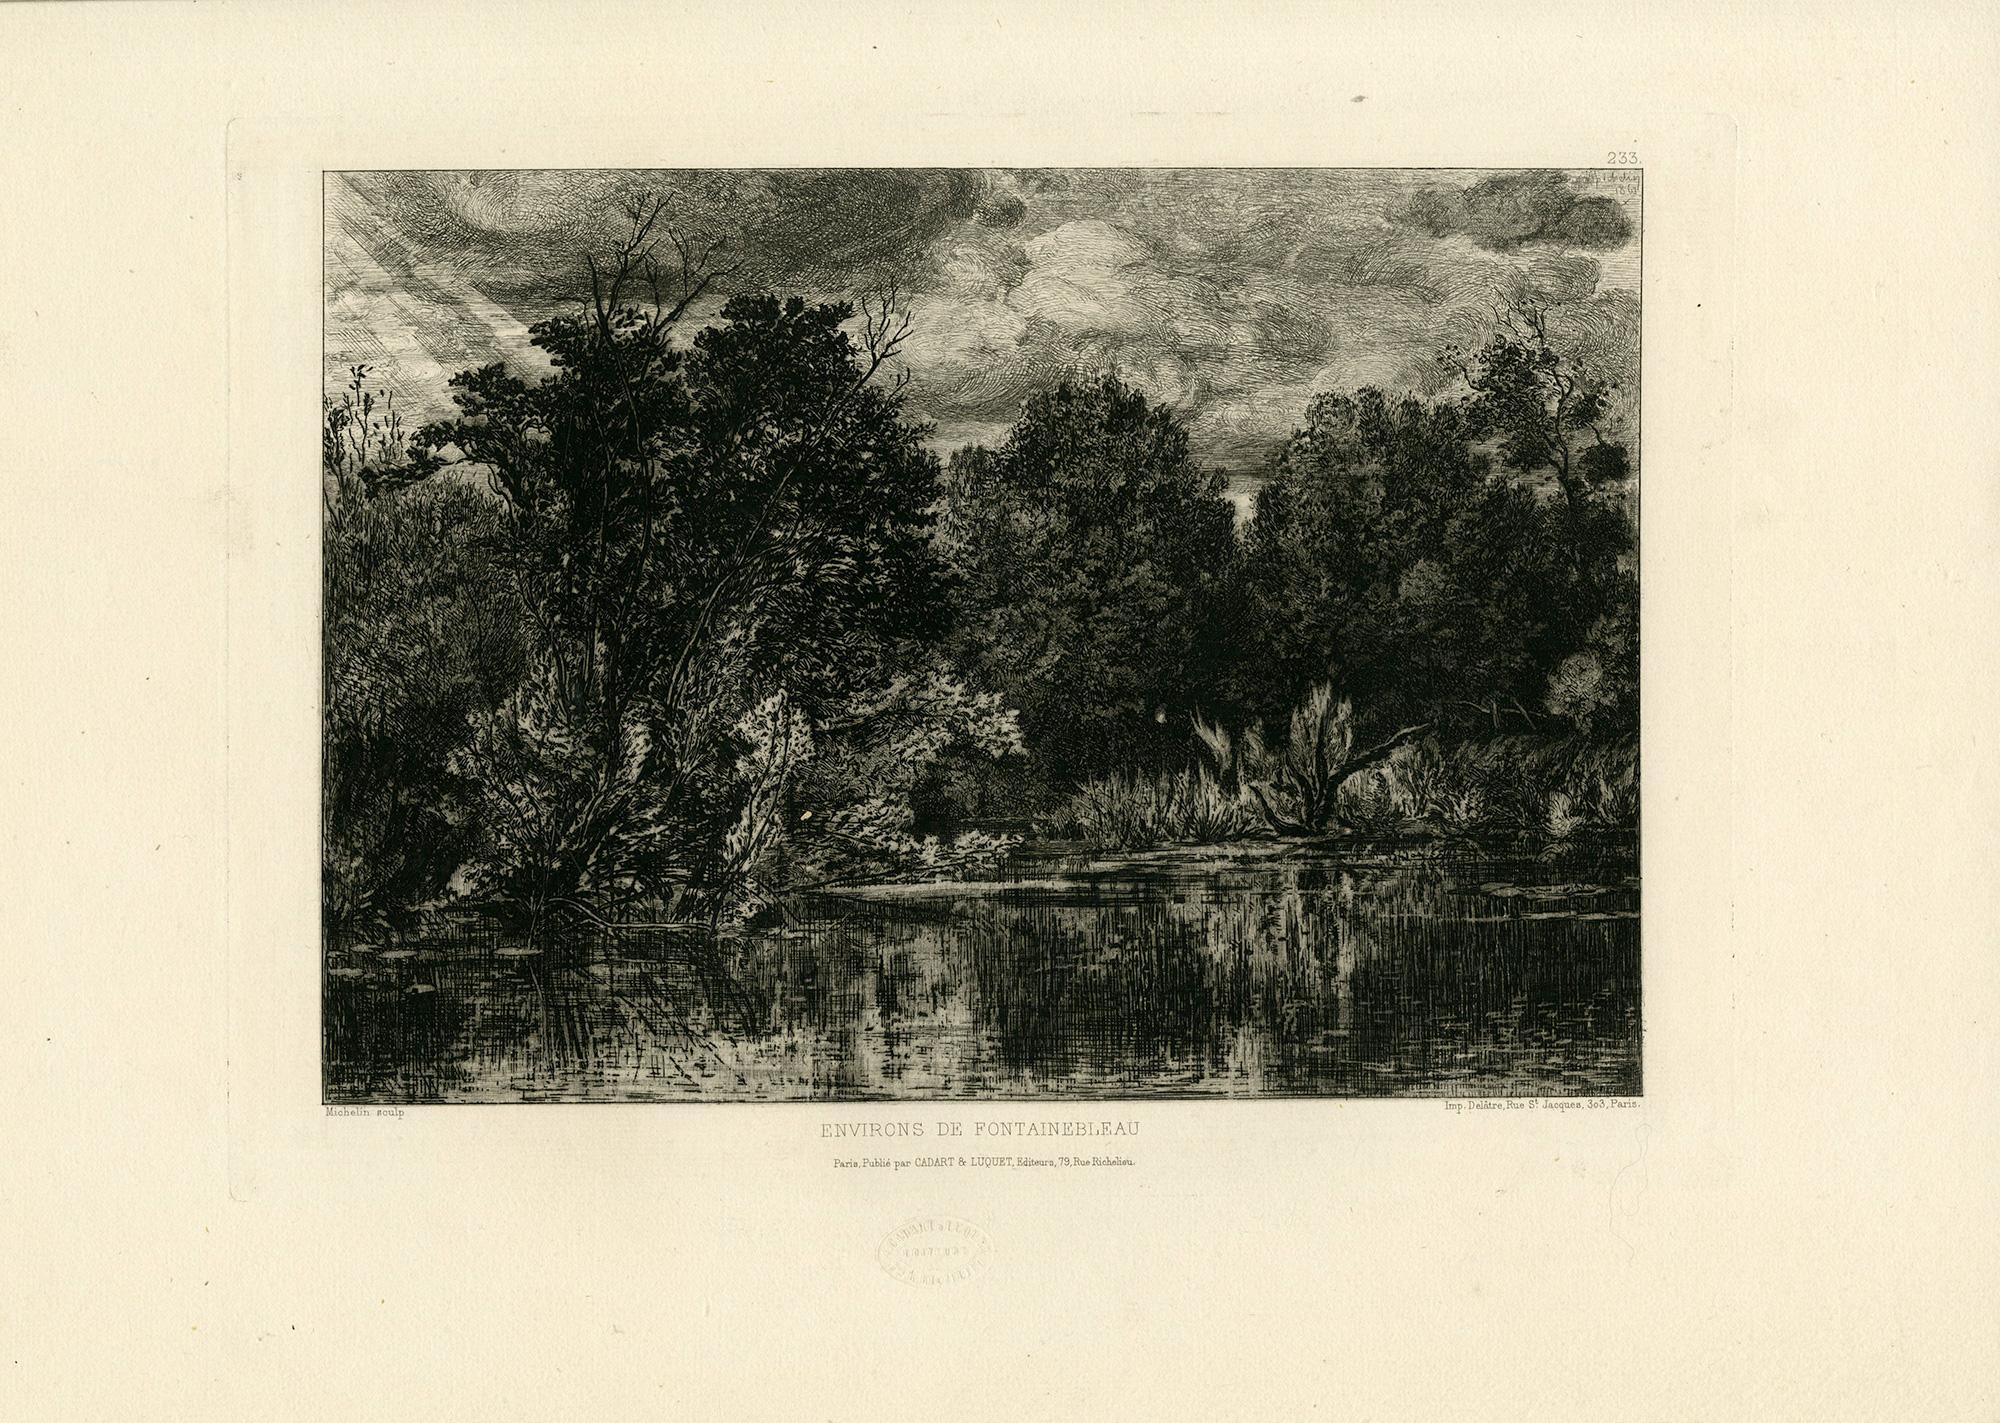 Environs de Fontainebleau - Print by Jules Michelin